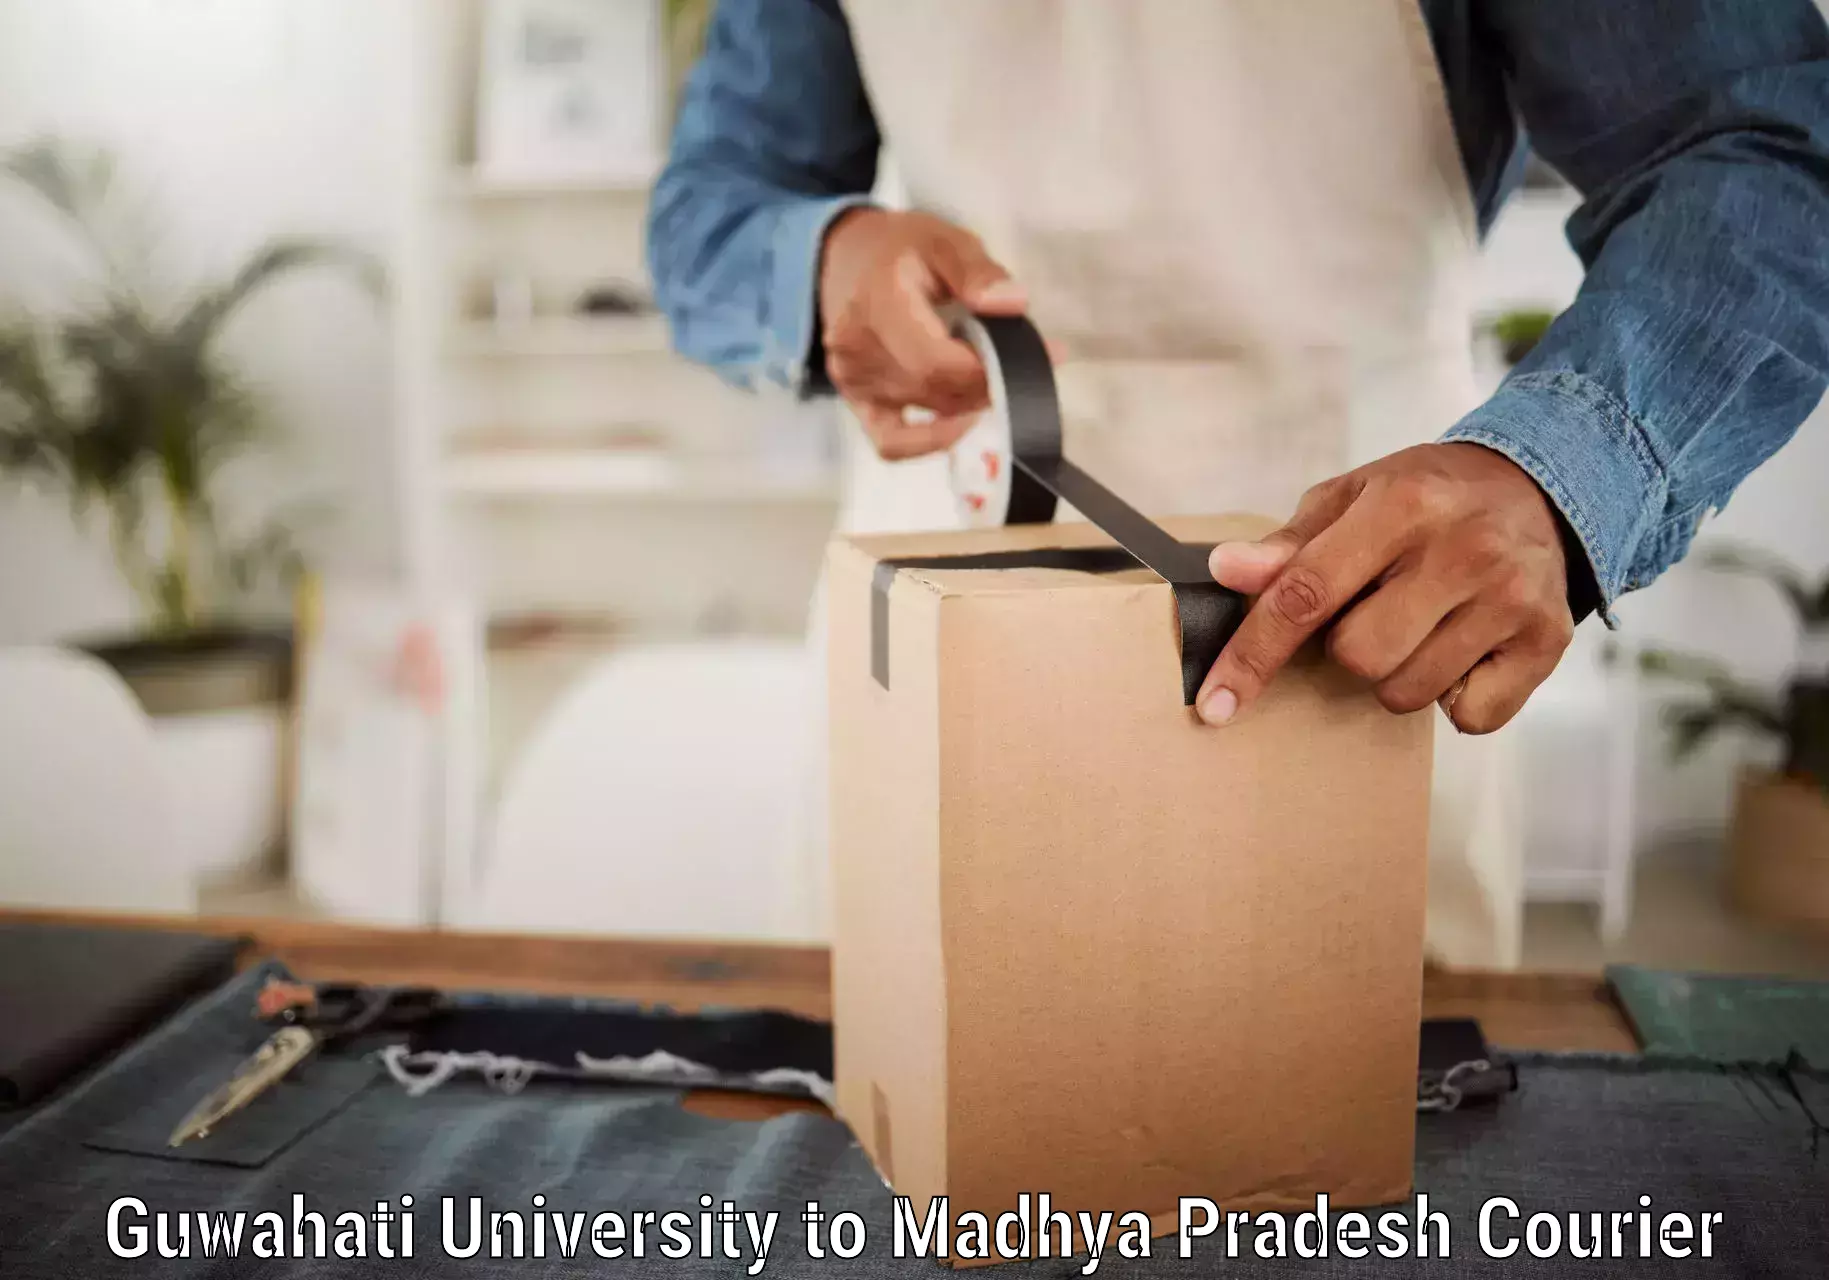 High-capacity parcel service Guwahati University to Nainpur